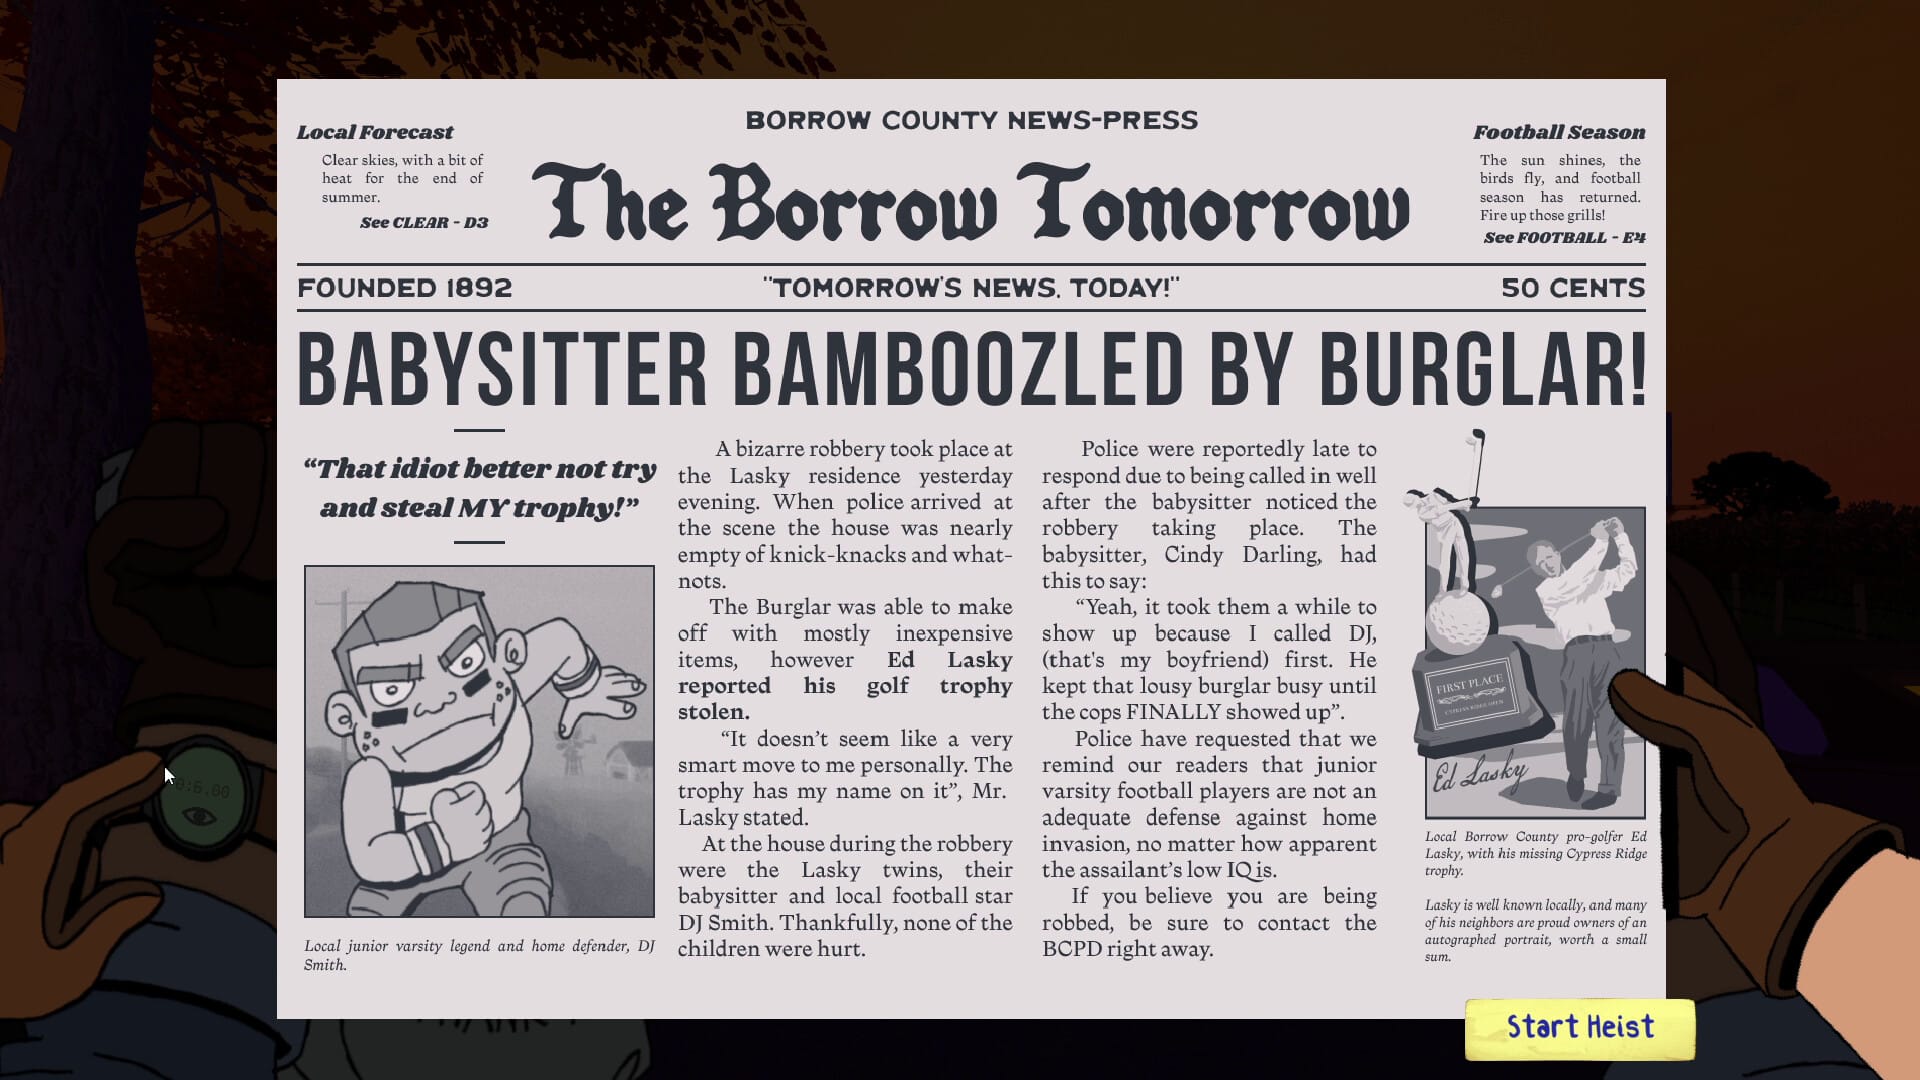 Screenshot. A newspaper headline reads "BABYSITTER BAMBOOZLED BY BURGLAR!"